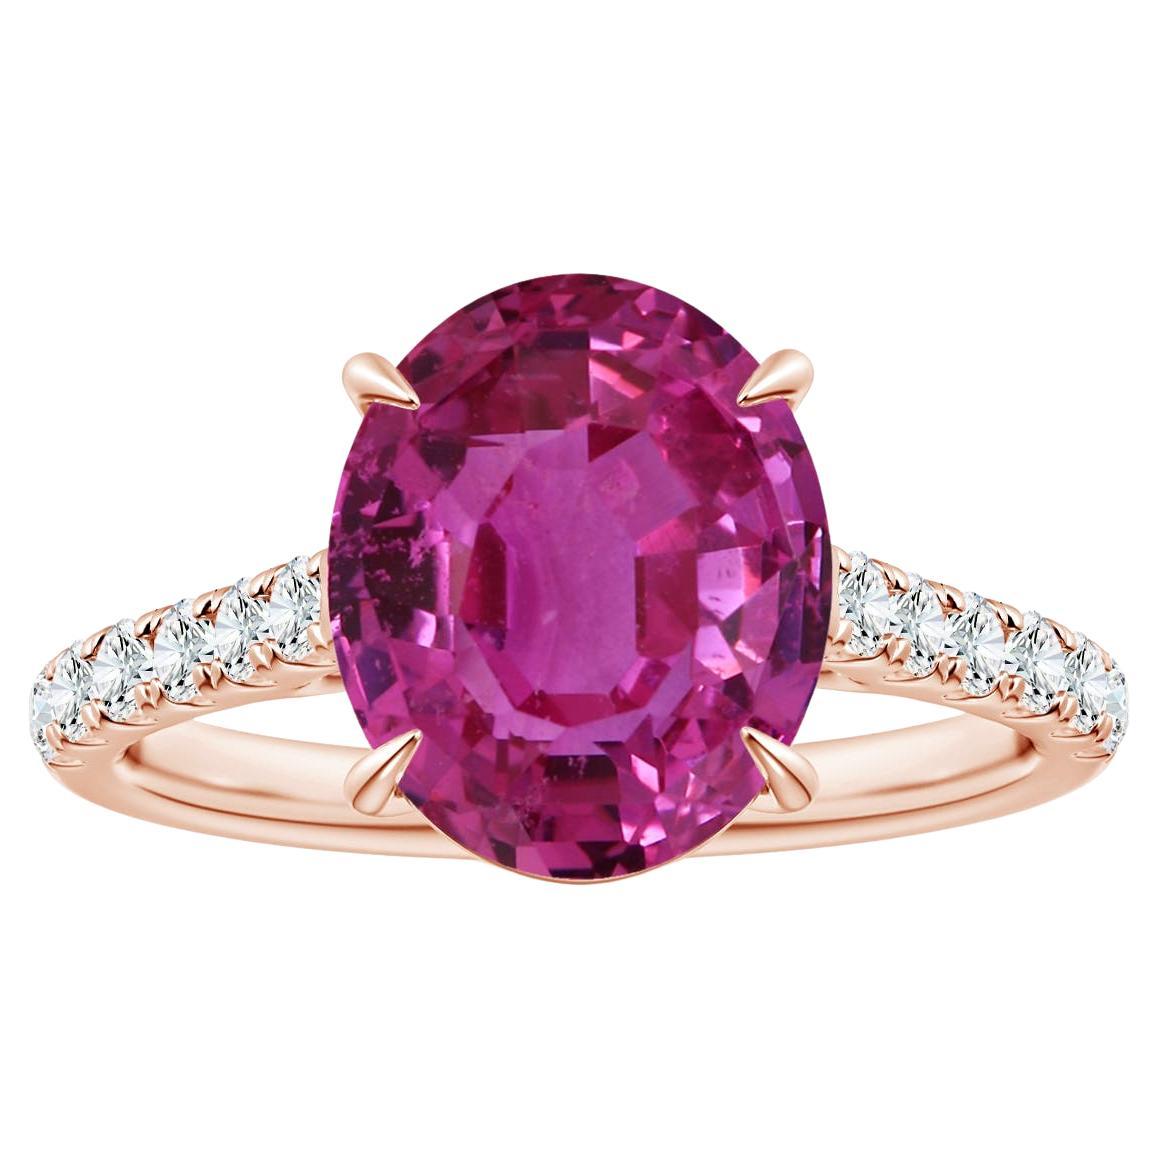 ANGARA Ring aus Roségold mit GIA-zertifiziertem ovalem rosa Saphir und Diamanten